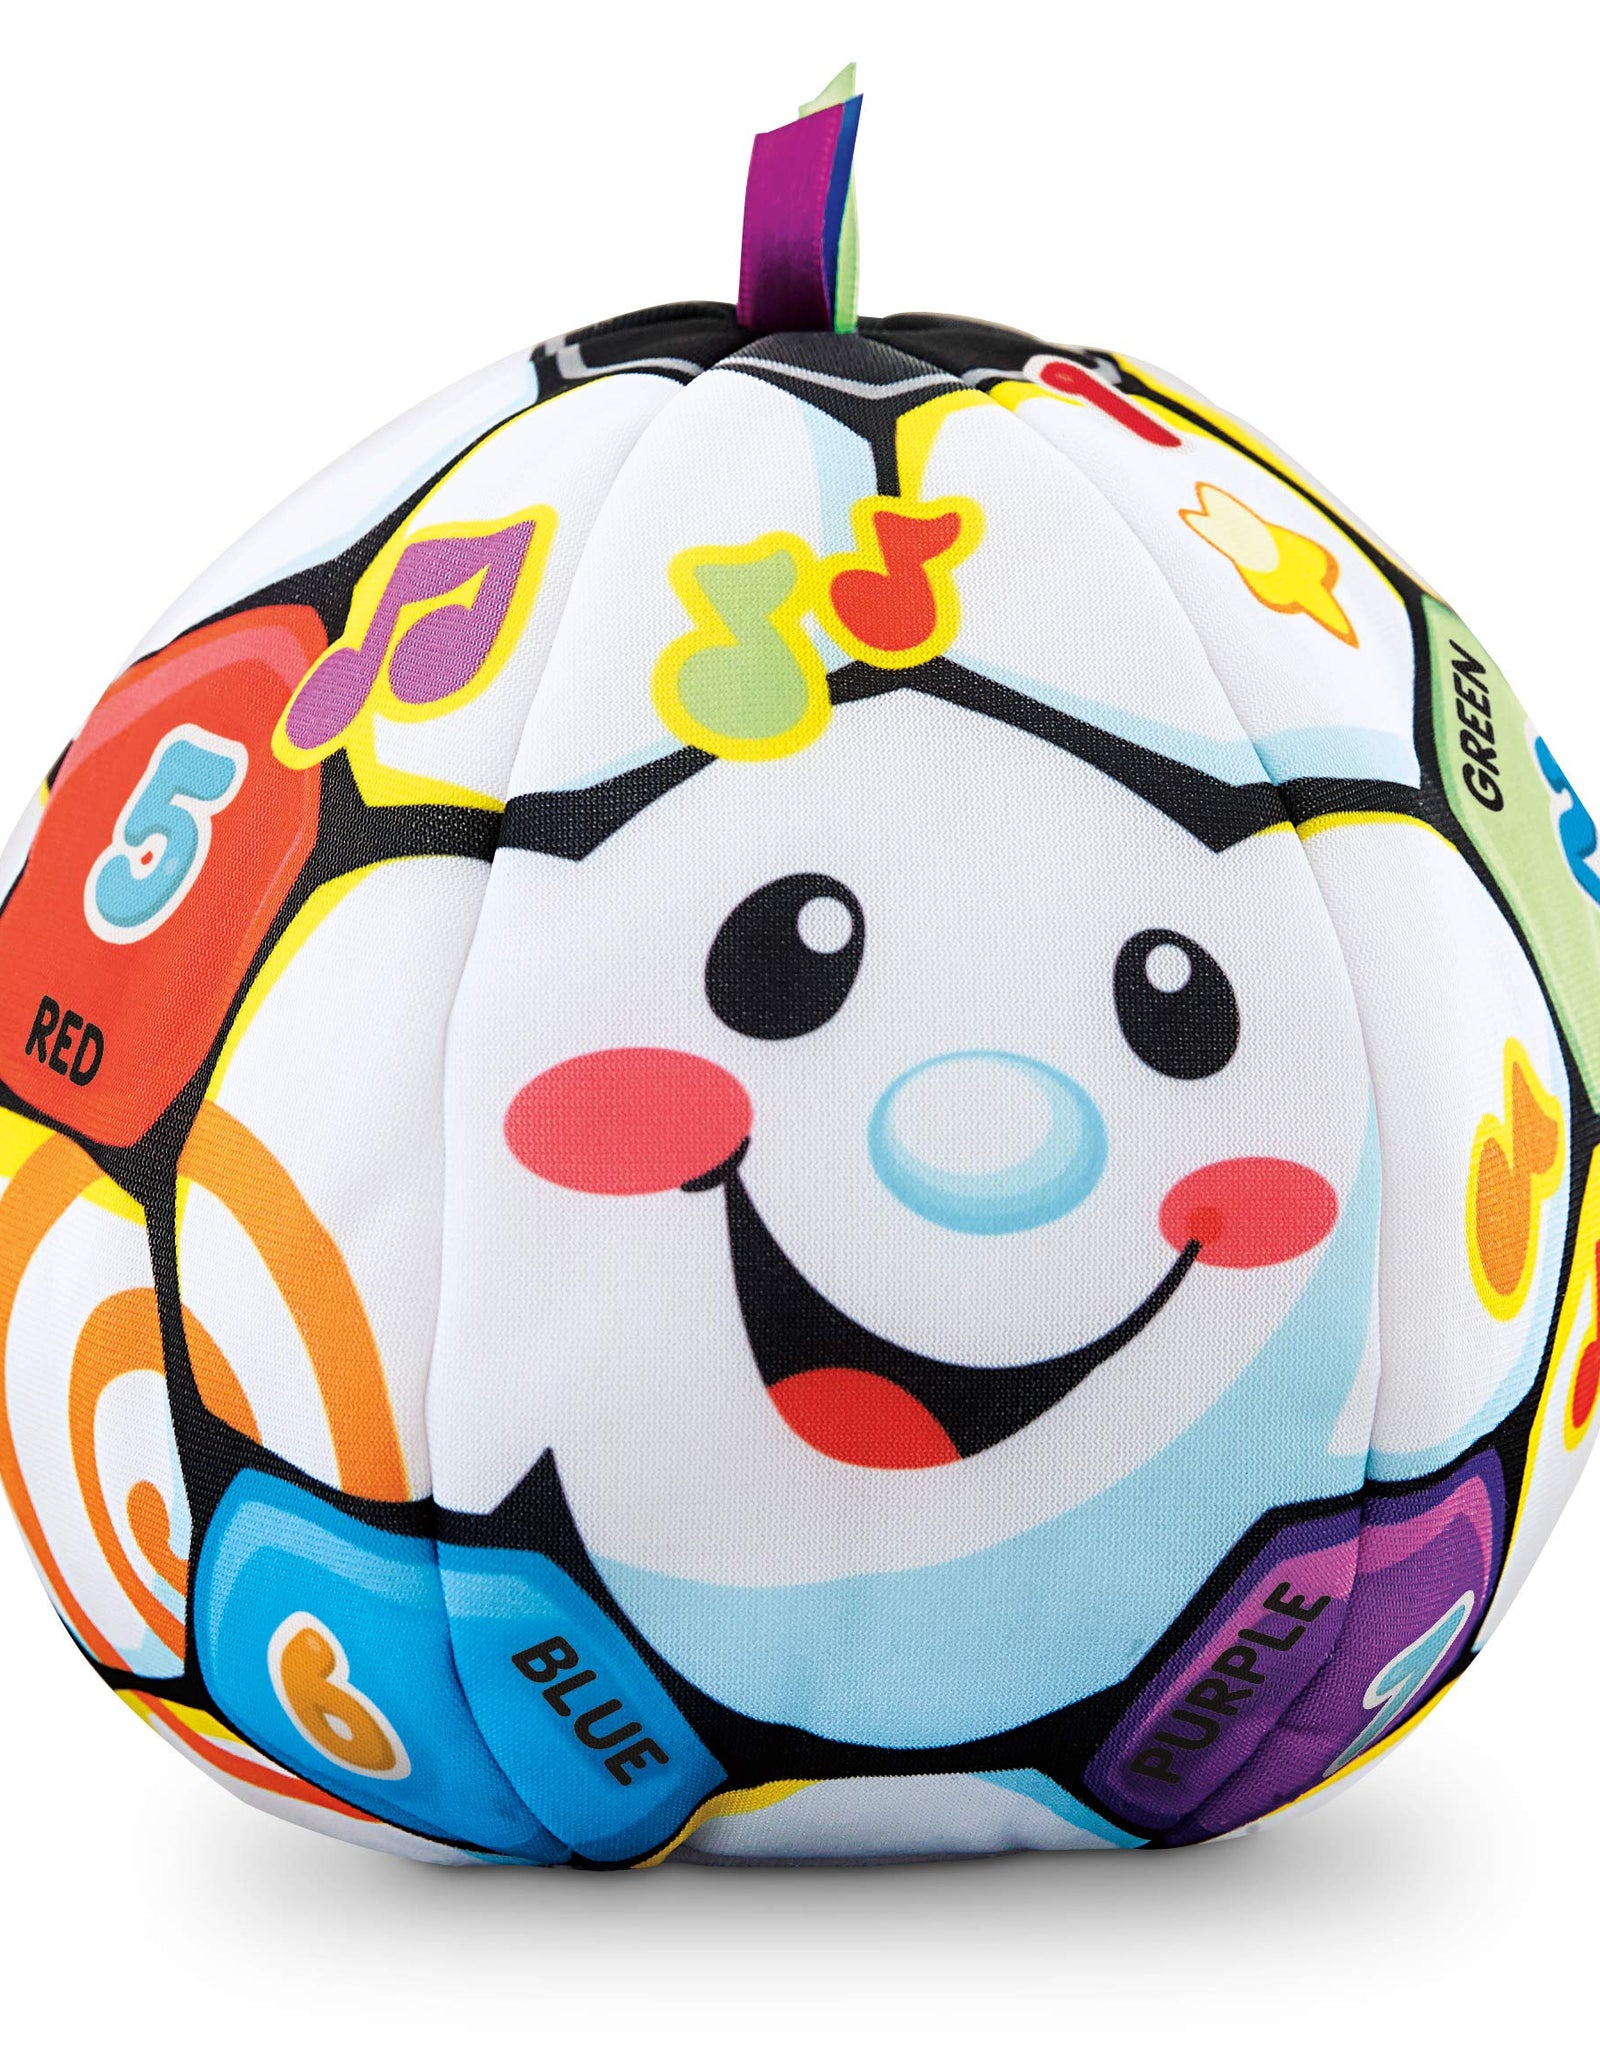 Fisher-Price Laugh & Learn Singin' Soccer Ball, Multicolor